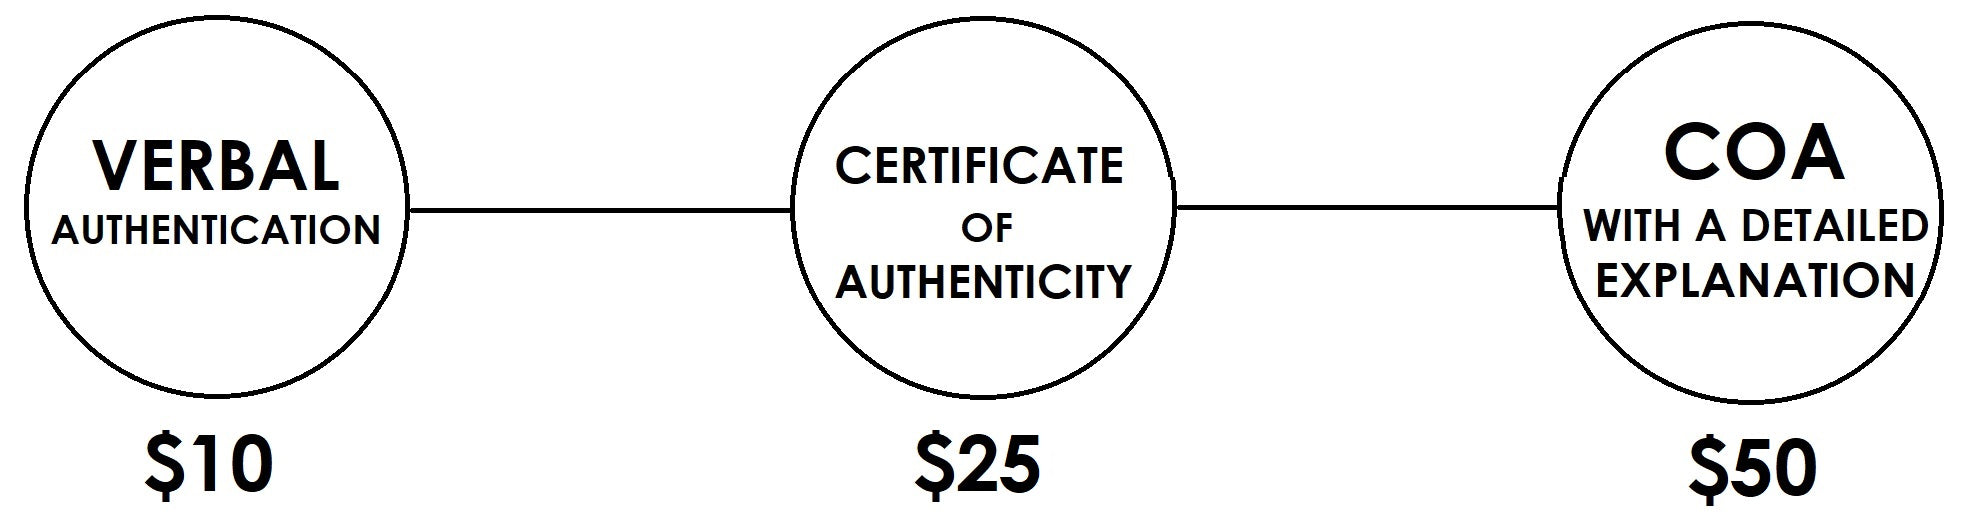 Louis Vuitton Neverfull Online Authentication Course (ADVANCED) – Bagaholic